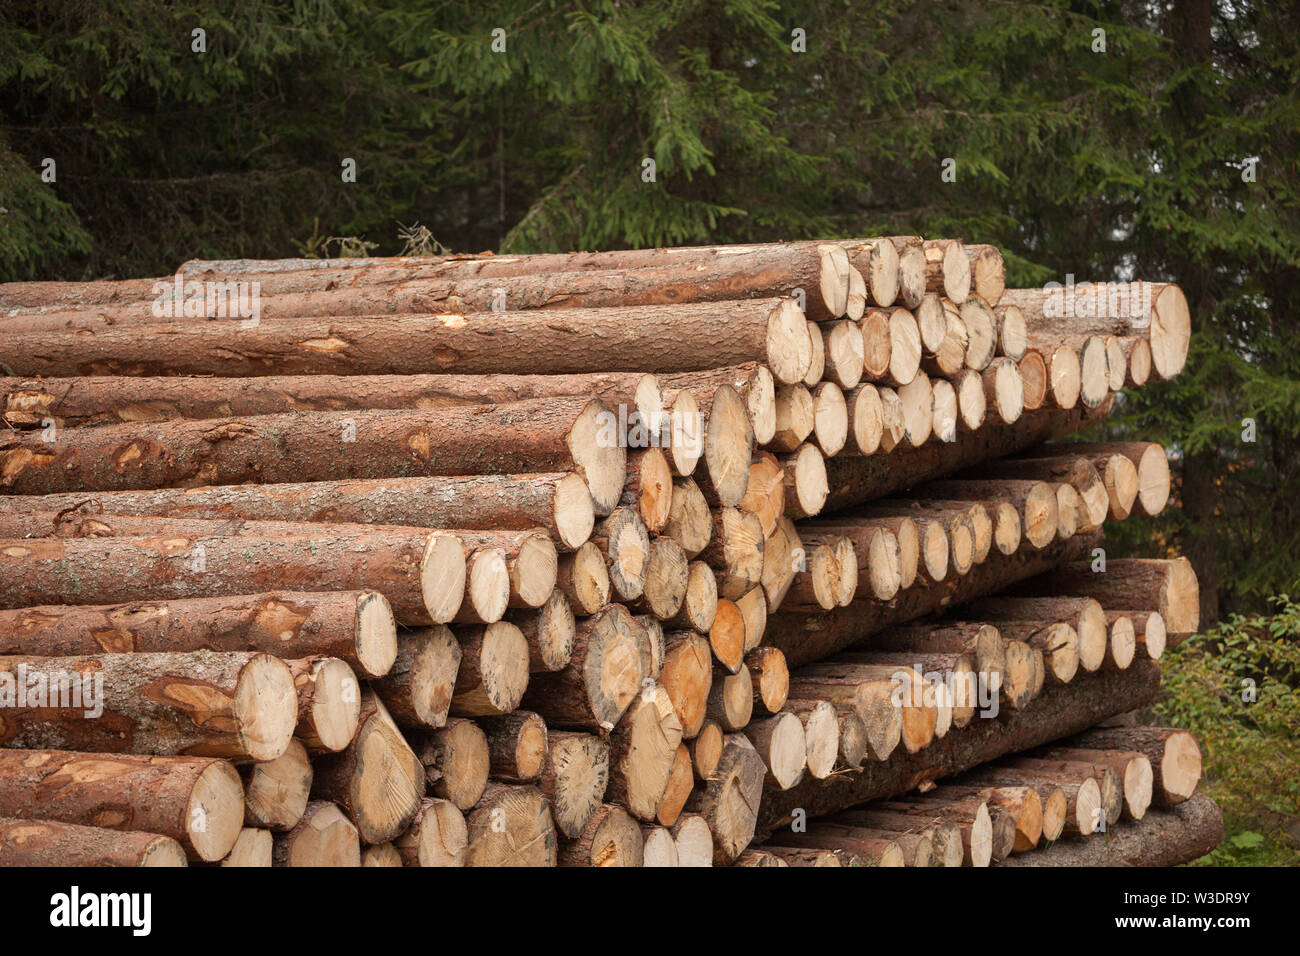 cutting pine tree for lumber